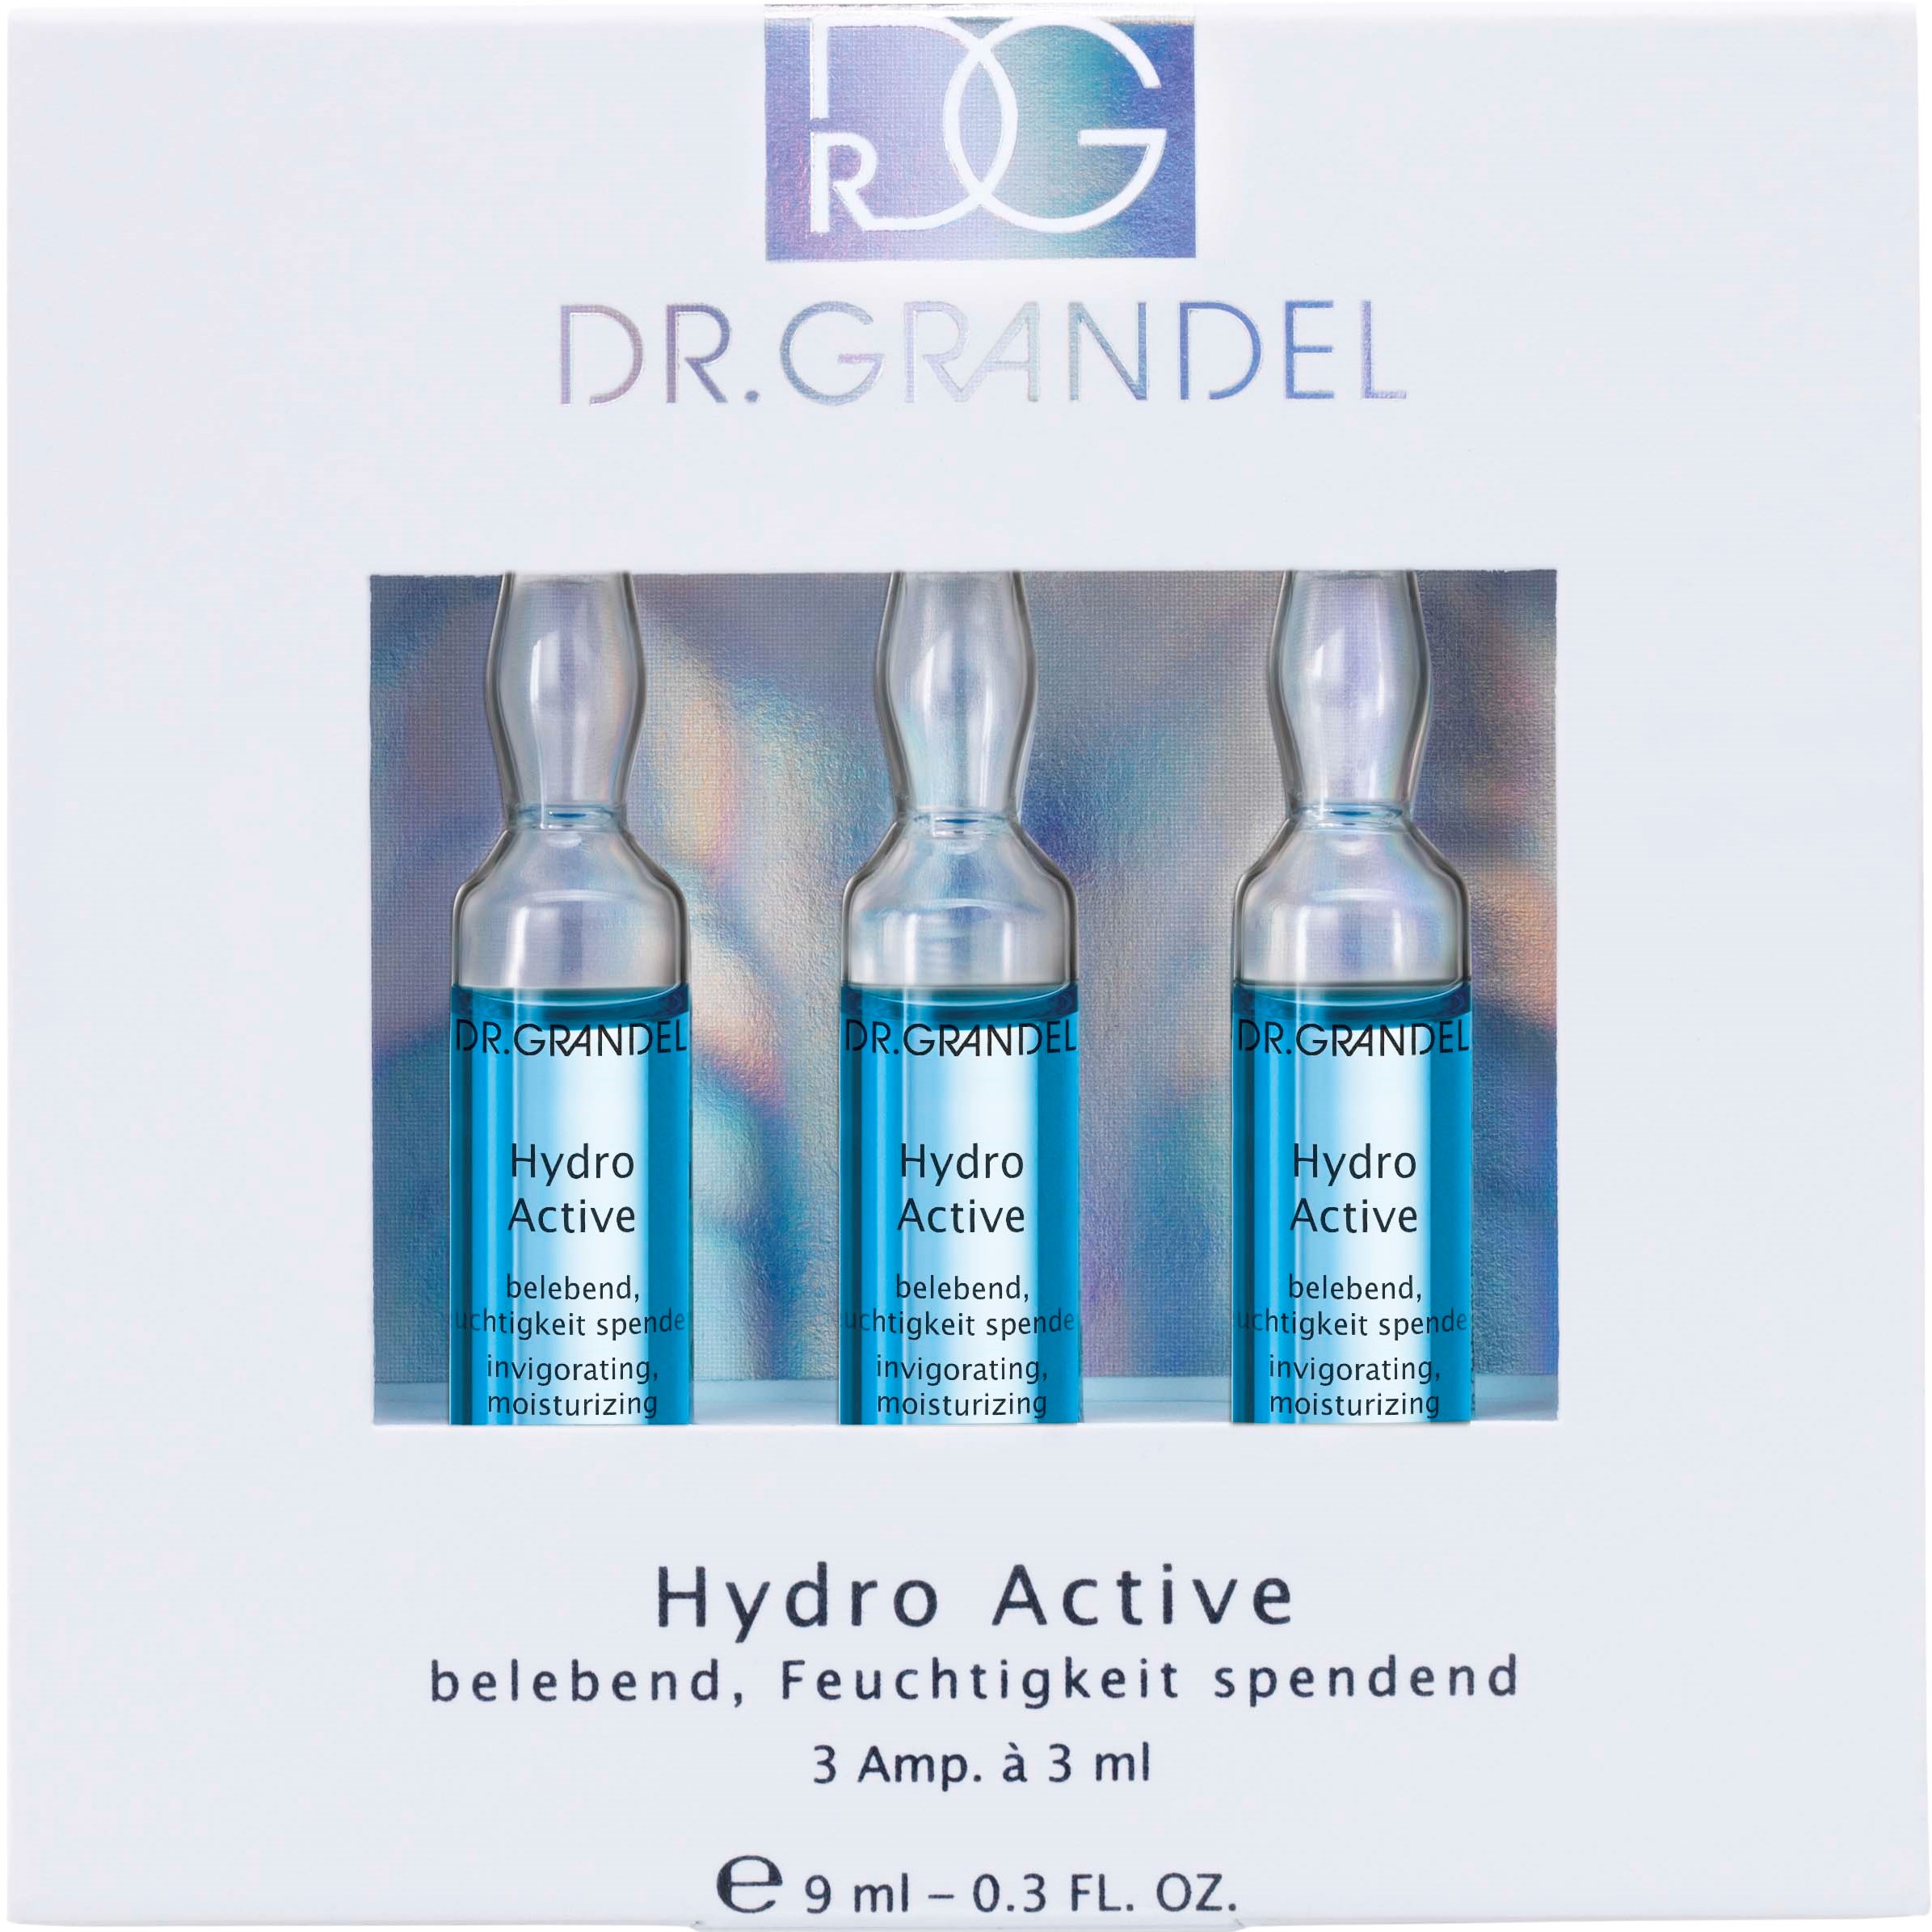 Dr. Grandel Hydro Active Moisturizing & Refreshing 3x3 ml 9 ml